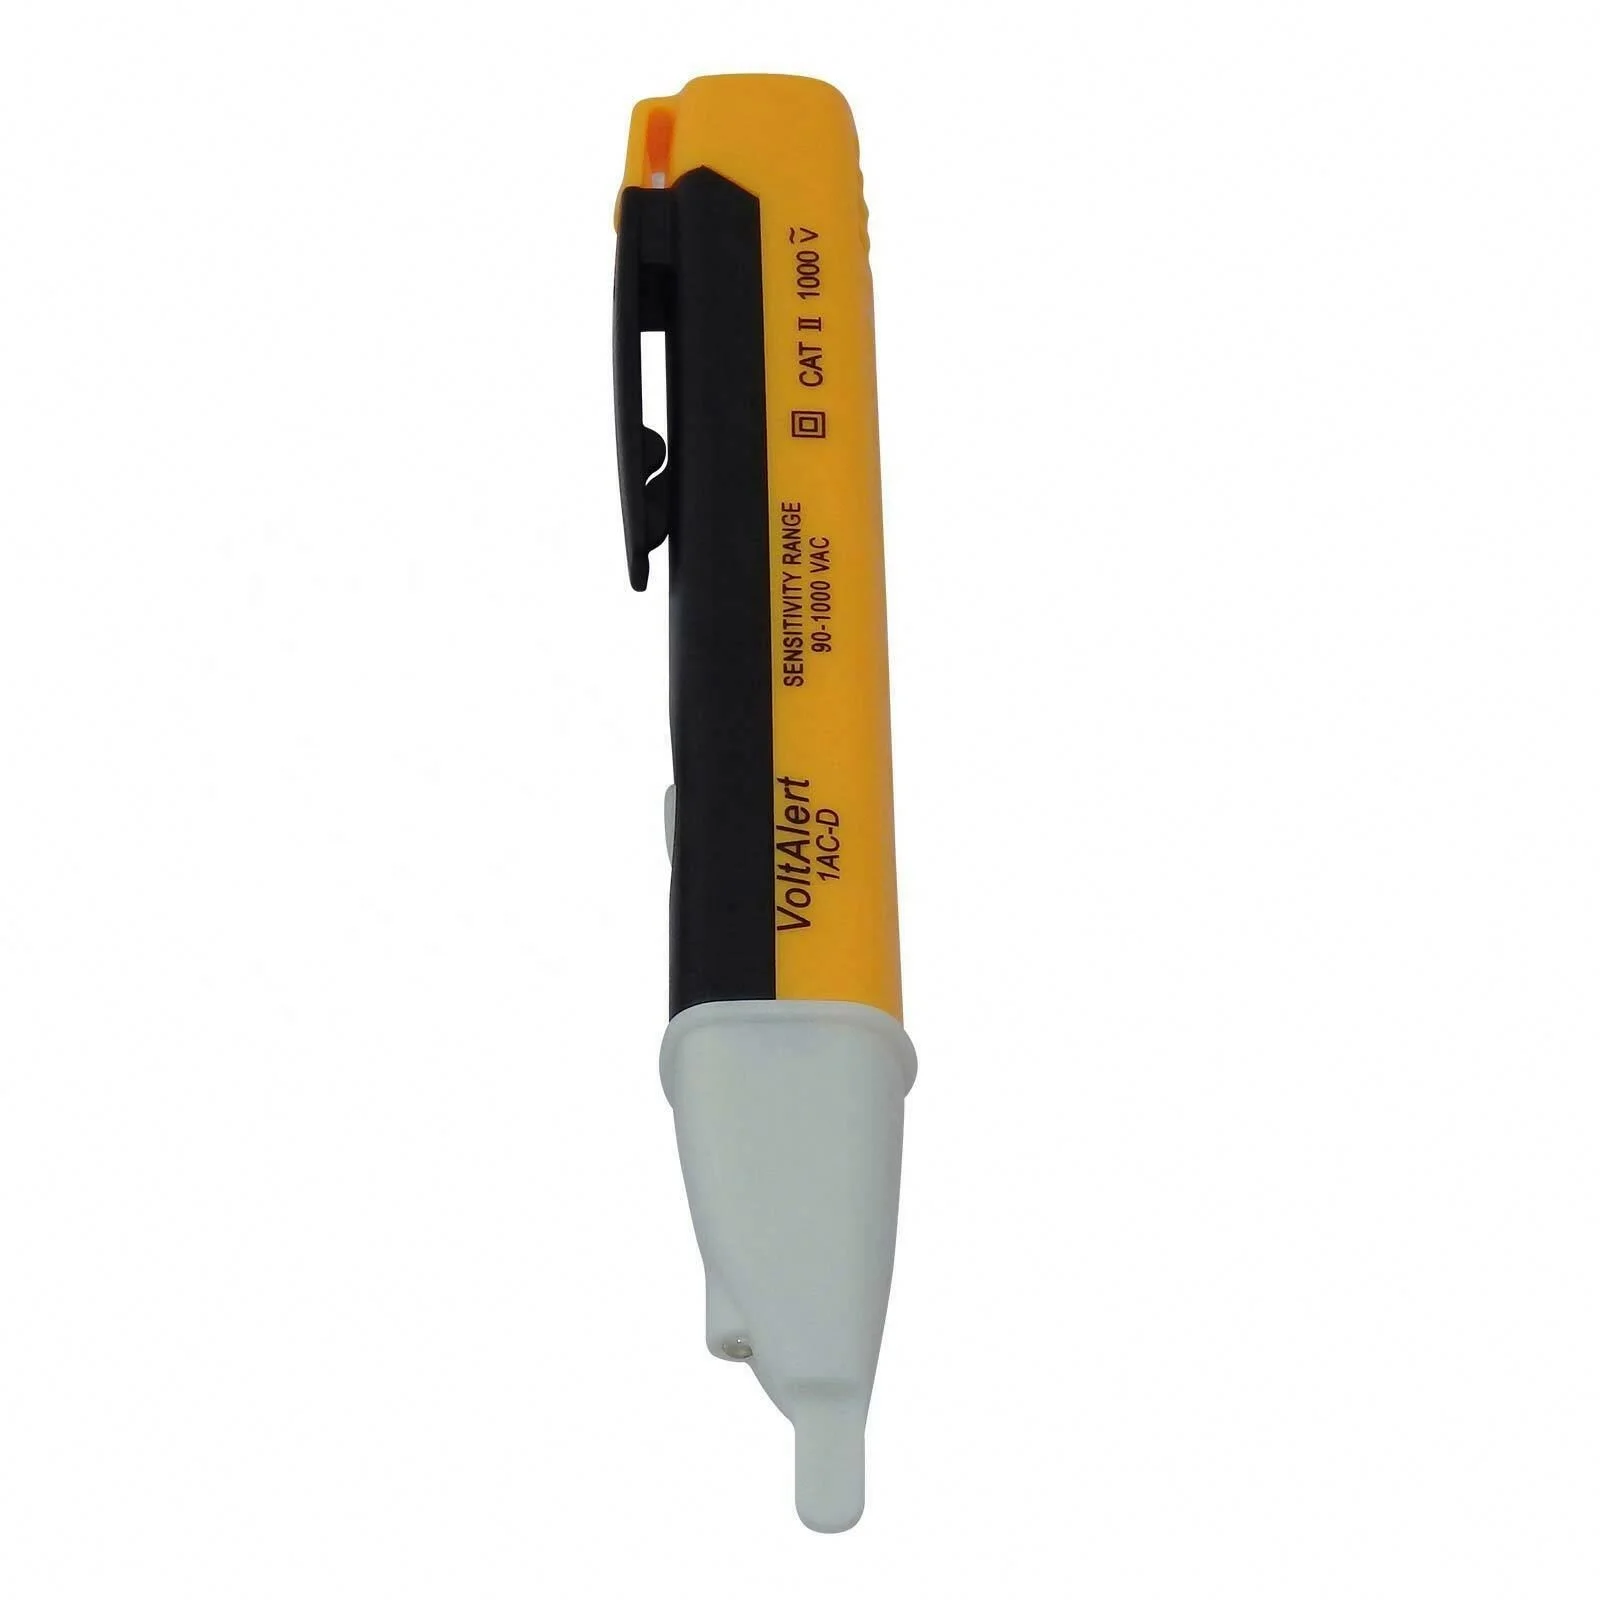 100-500V 2 in 1 Multi-function Electrical Tester Pen Screwdriver Detector Probe